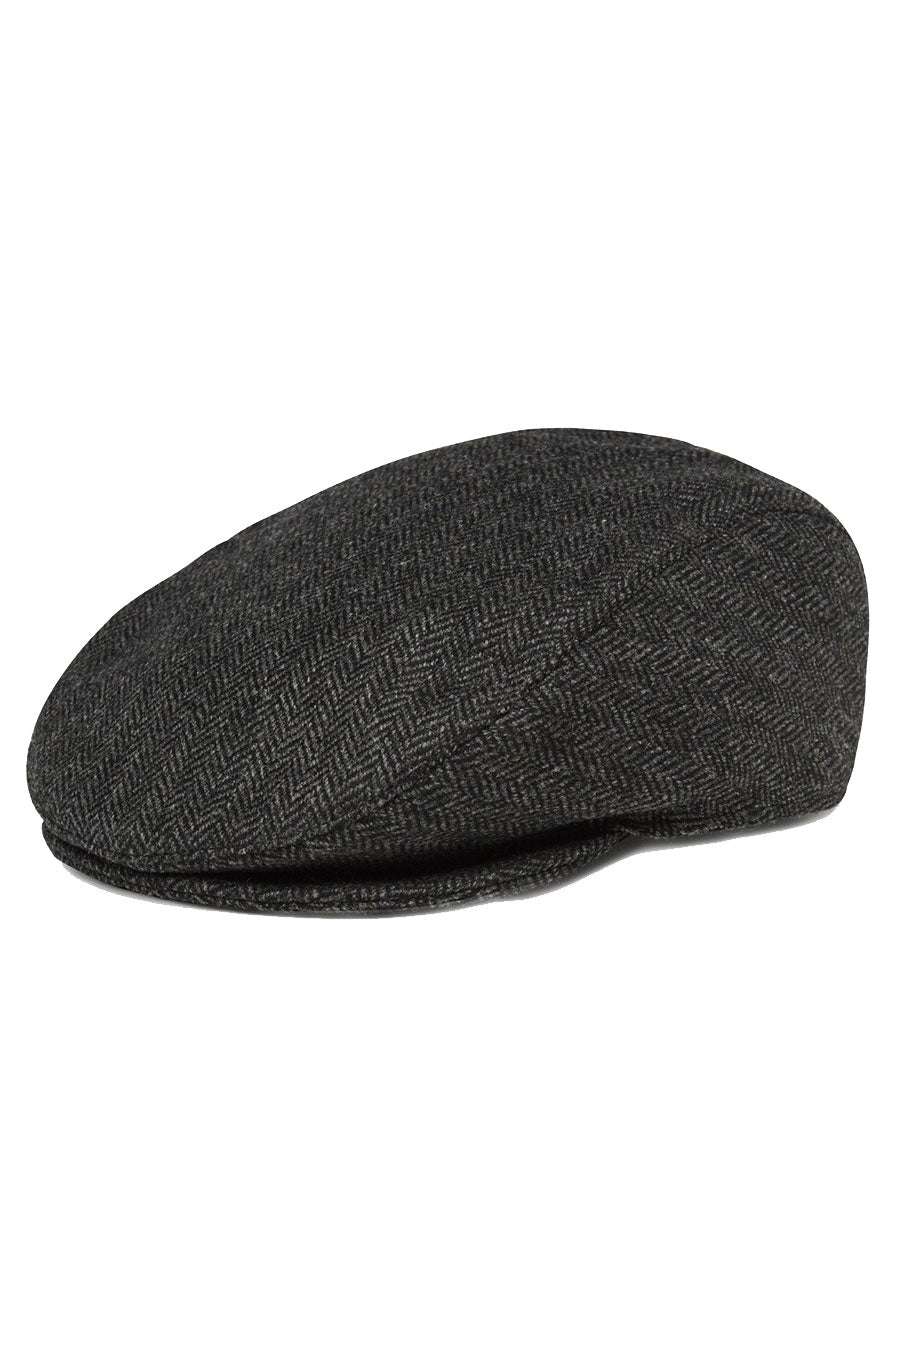 black herringbone flat cap